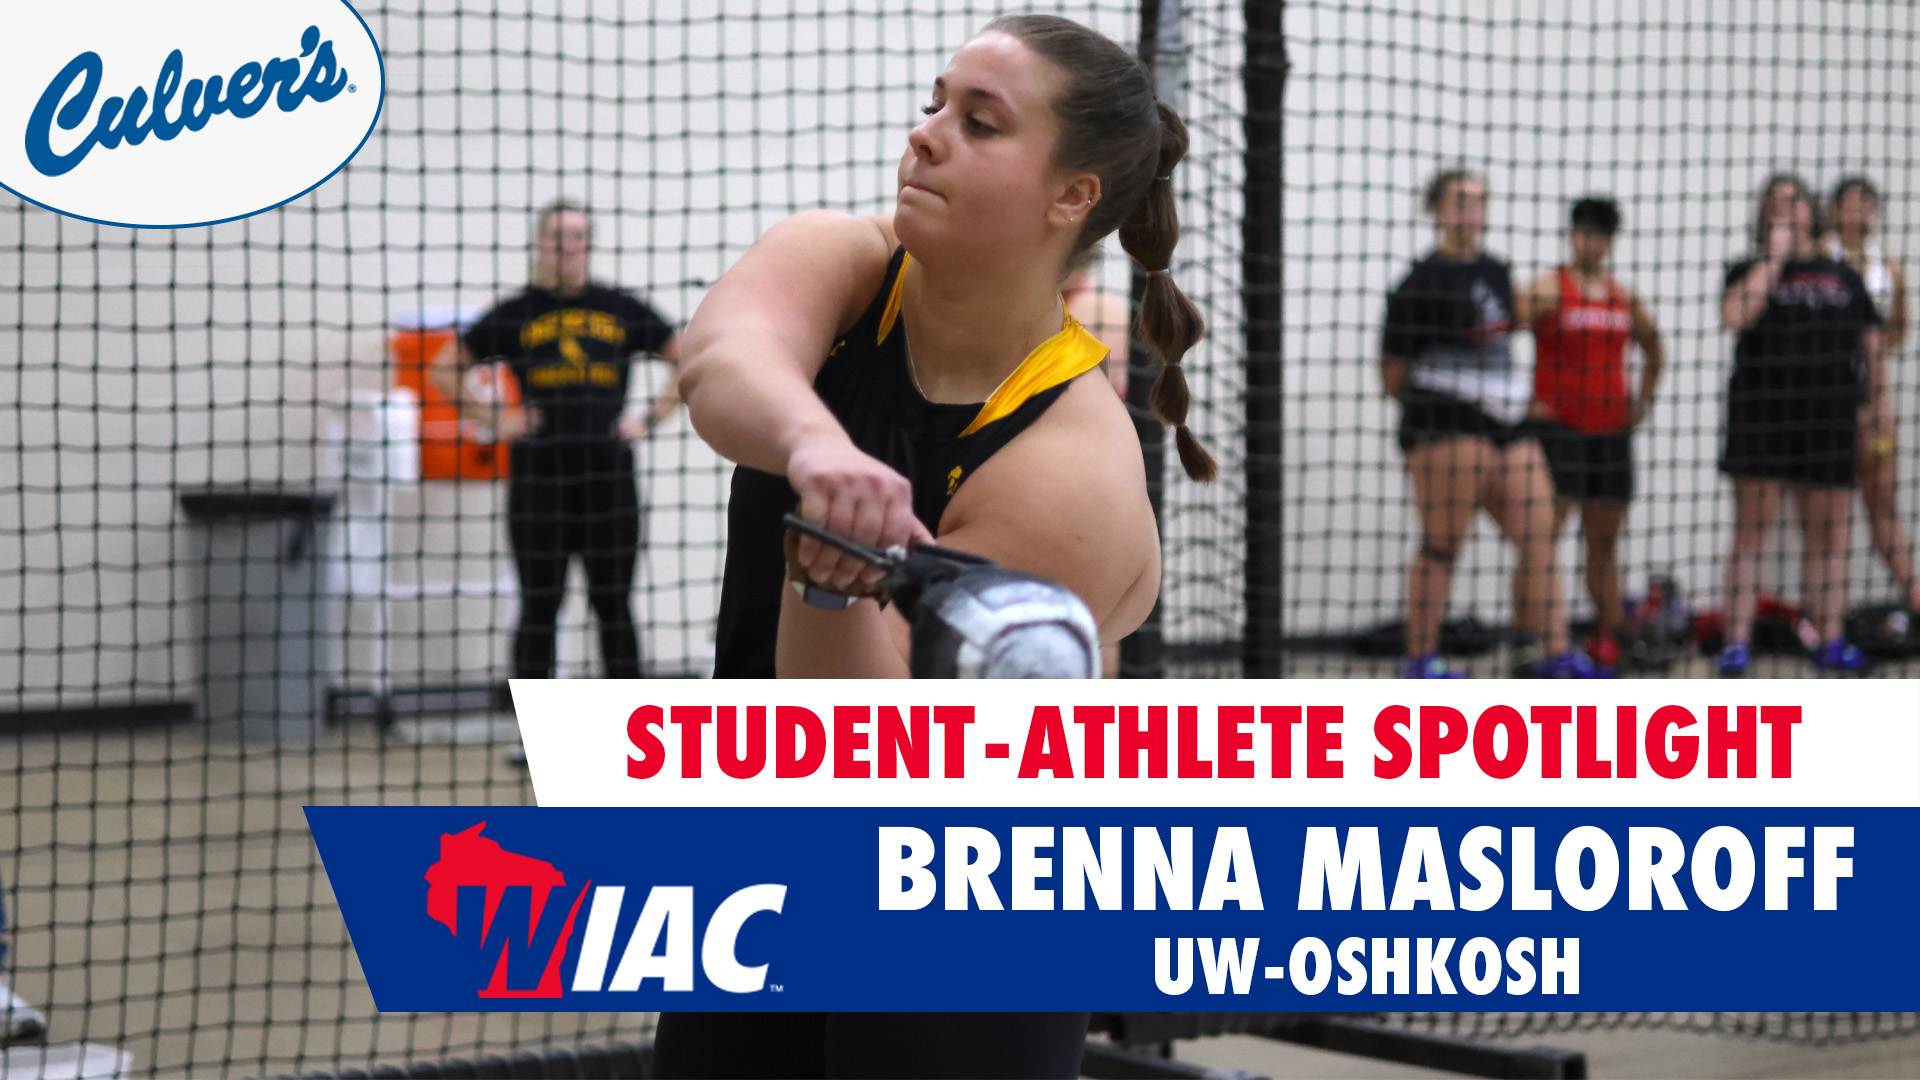 WIAC Student-Athlete Spotlight: Brenna Masloroff